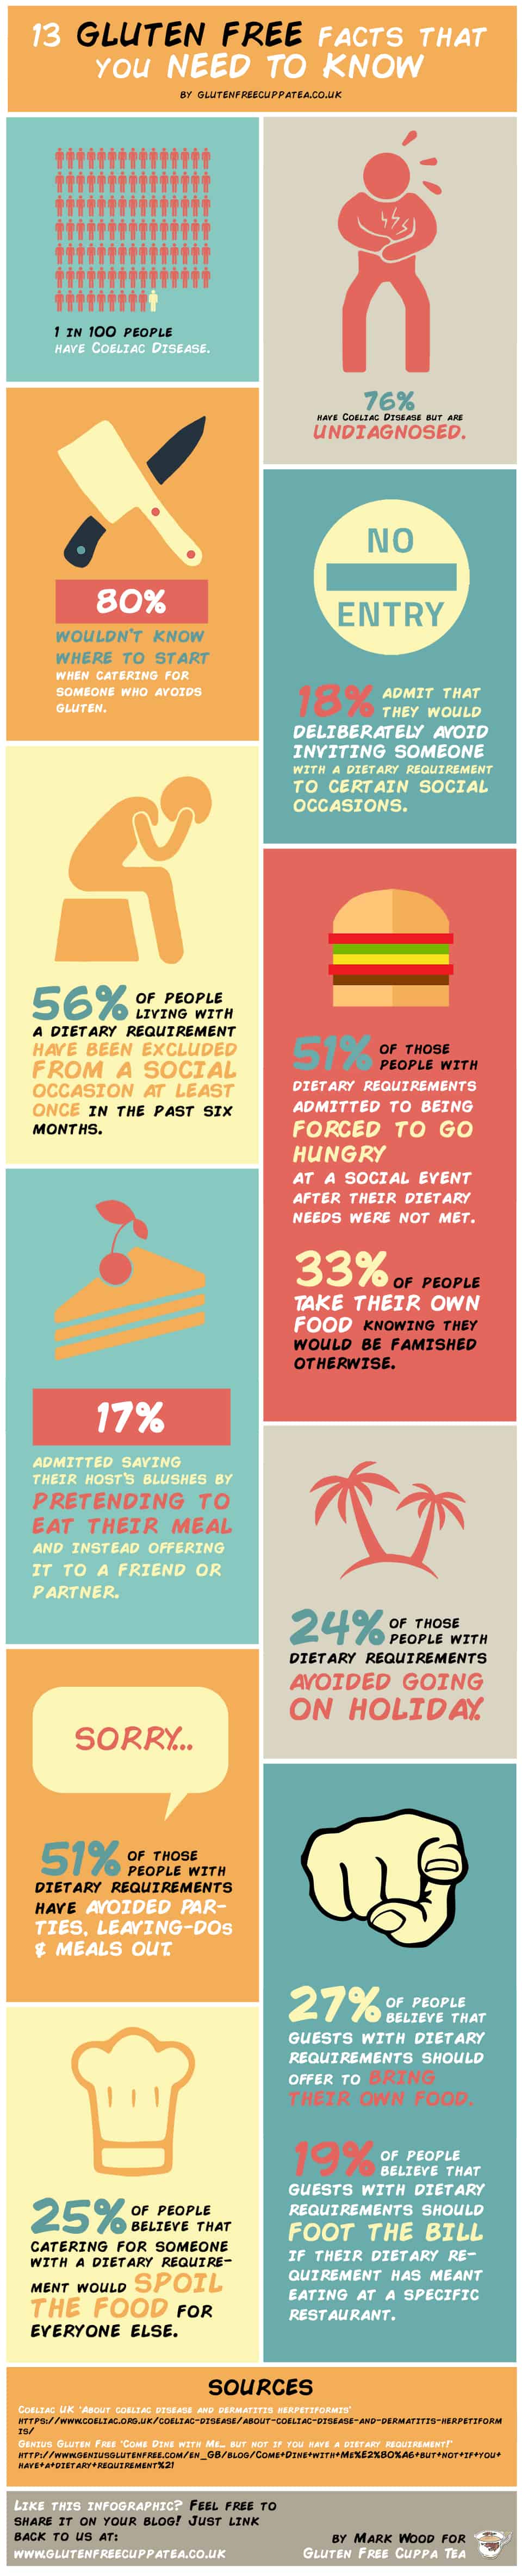 gluten-free-fact-infographic